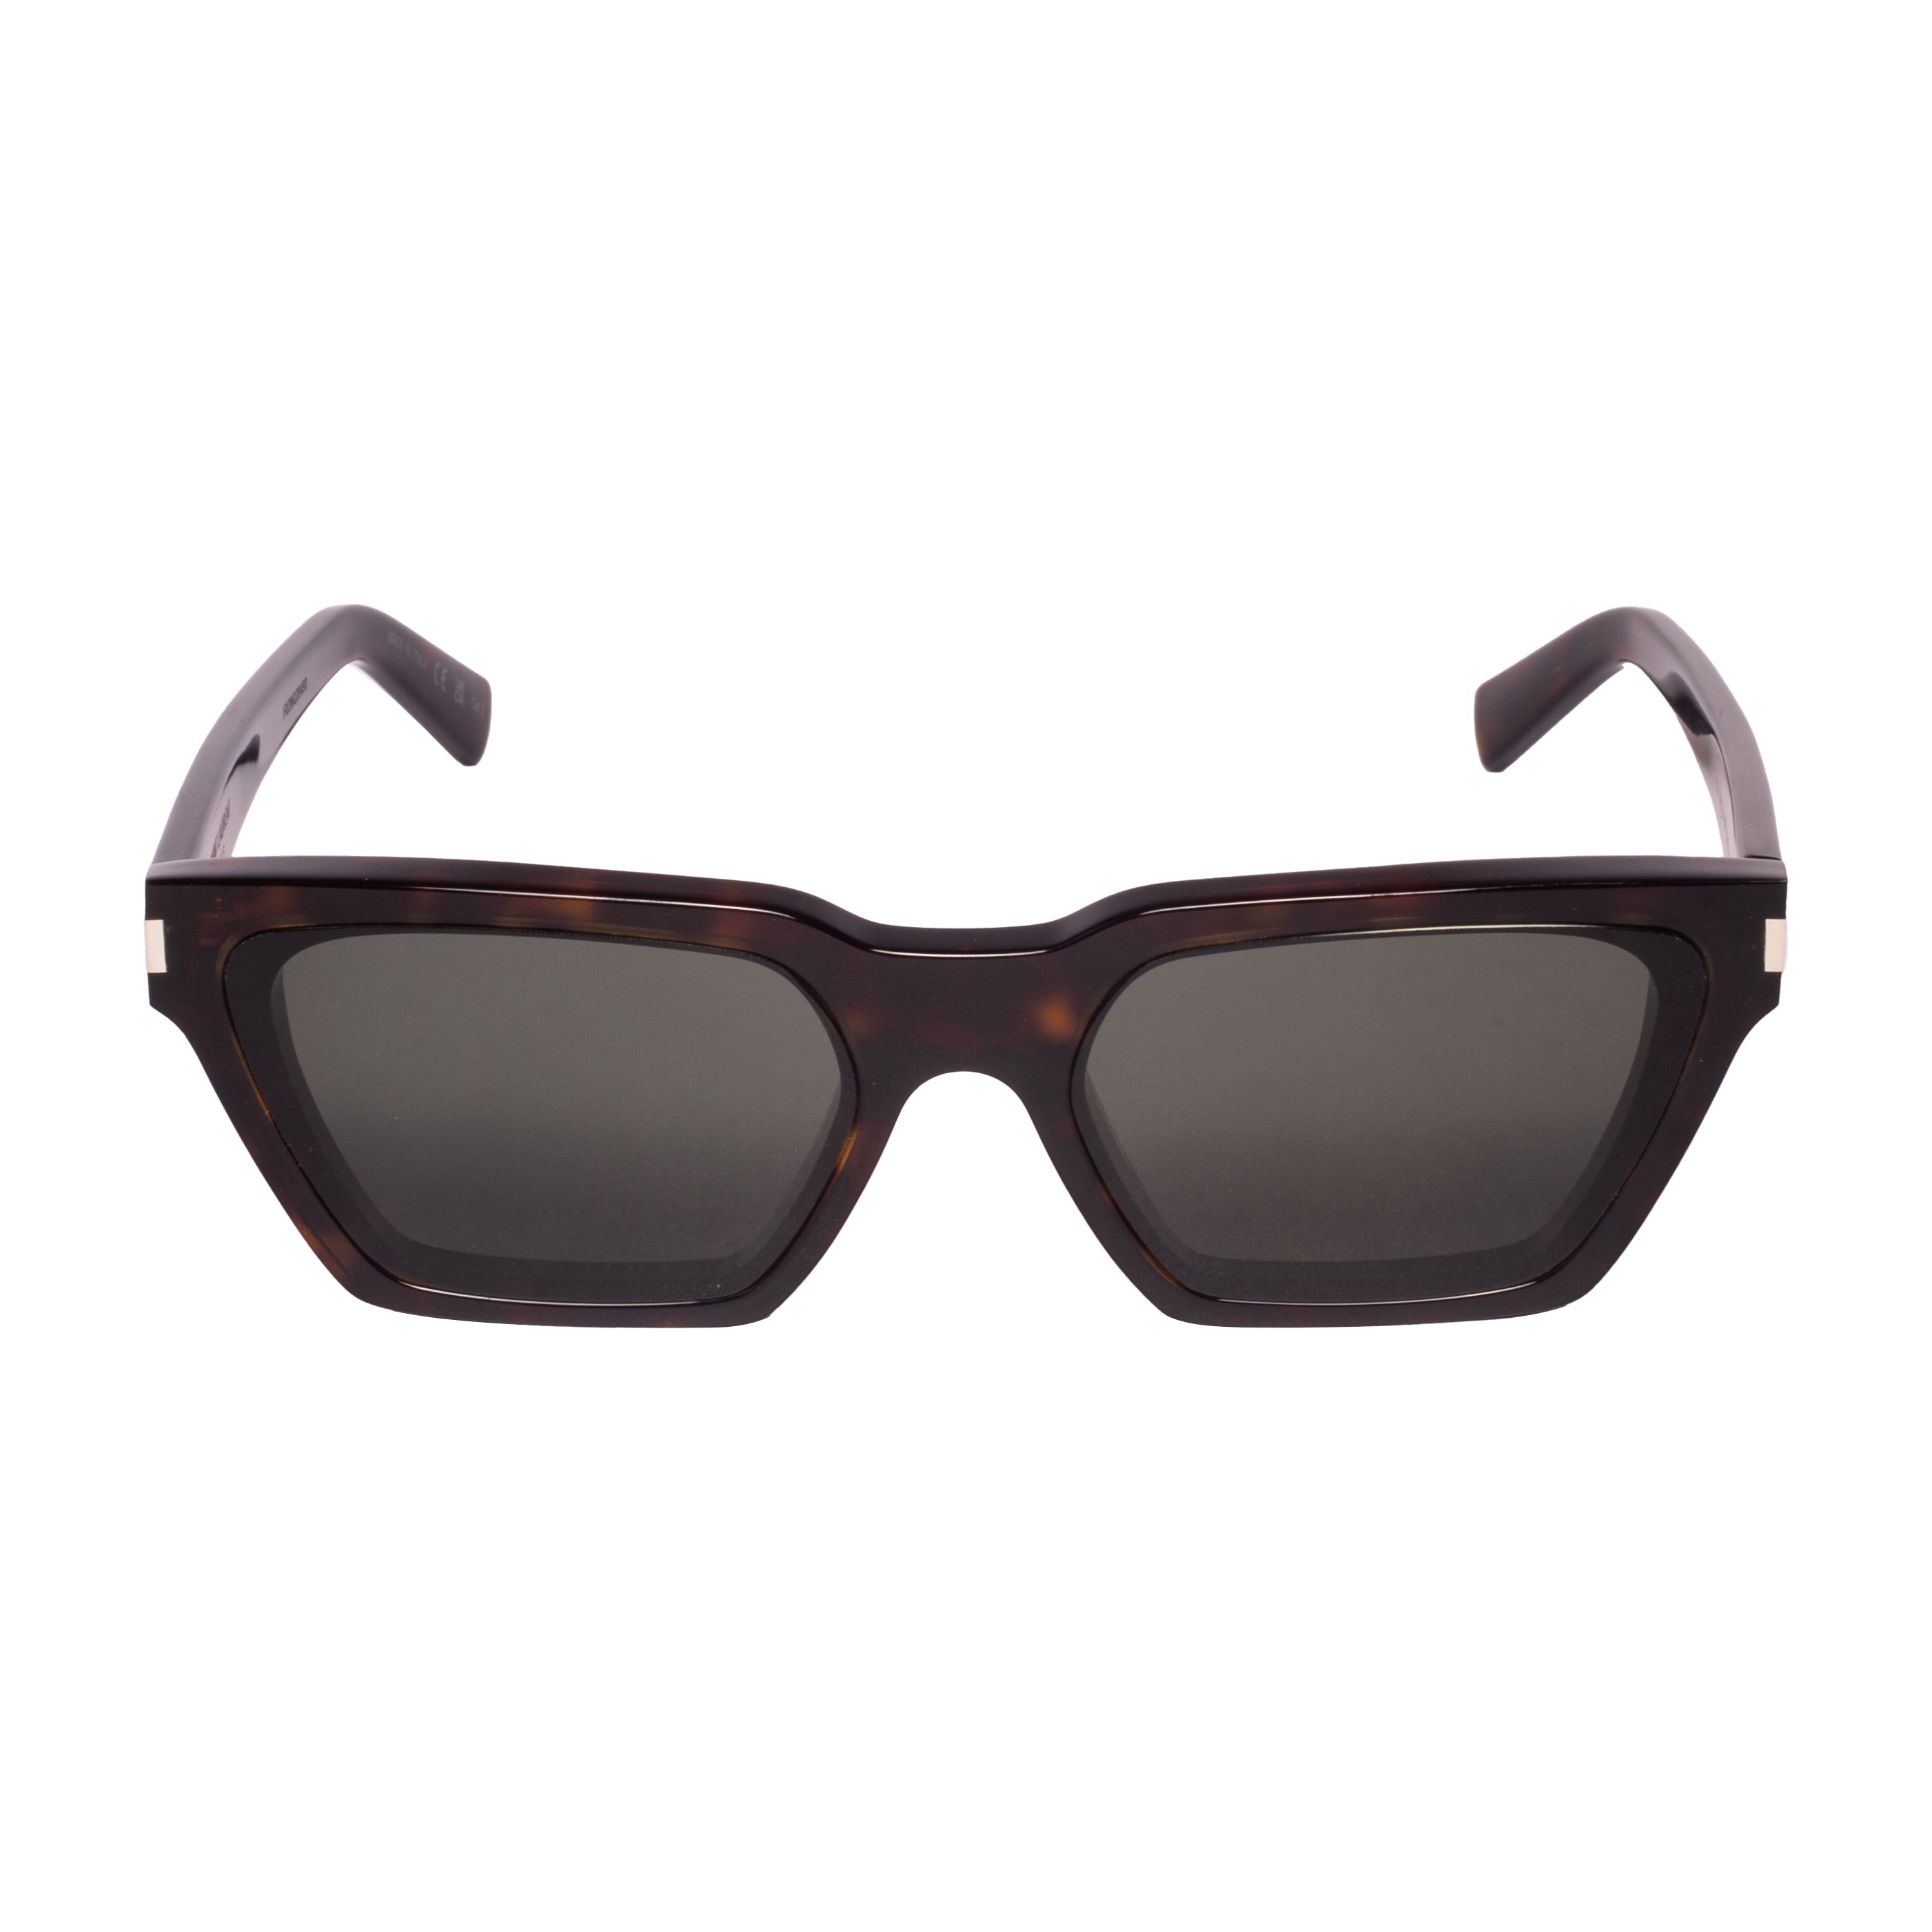 Saint Laurent-SL 633 CALISTA-57- Sunglasses - Premium Sunglasses from Saint Laurent - Just Rs. 26400! Shop now at Laxmi Opticians